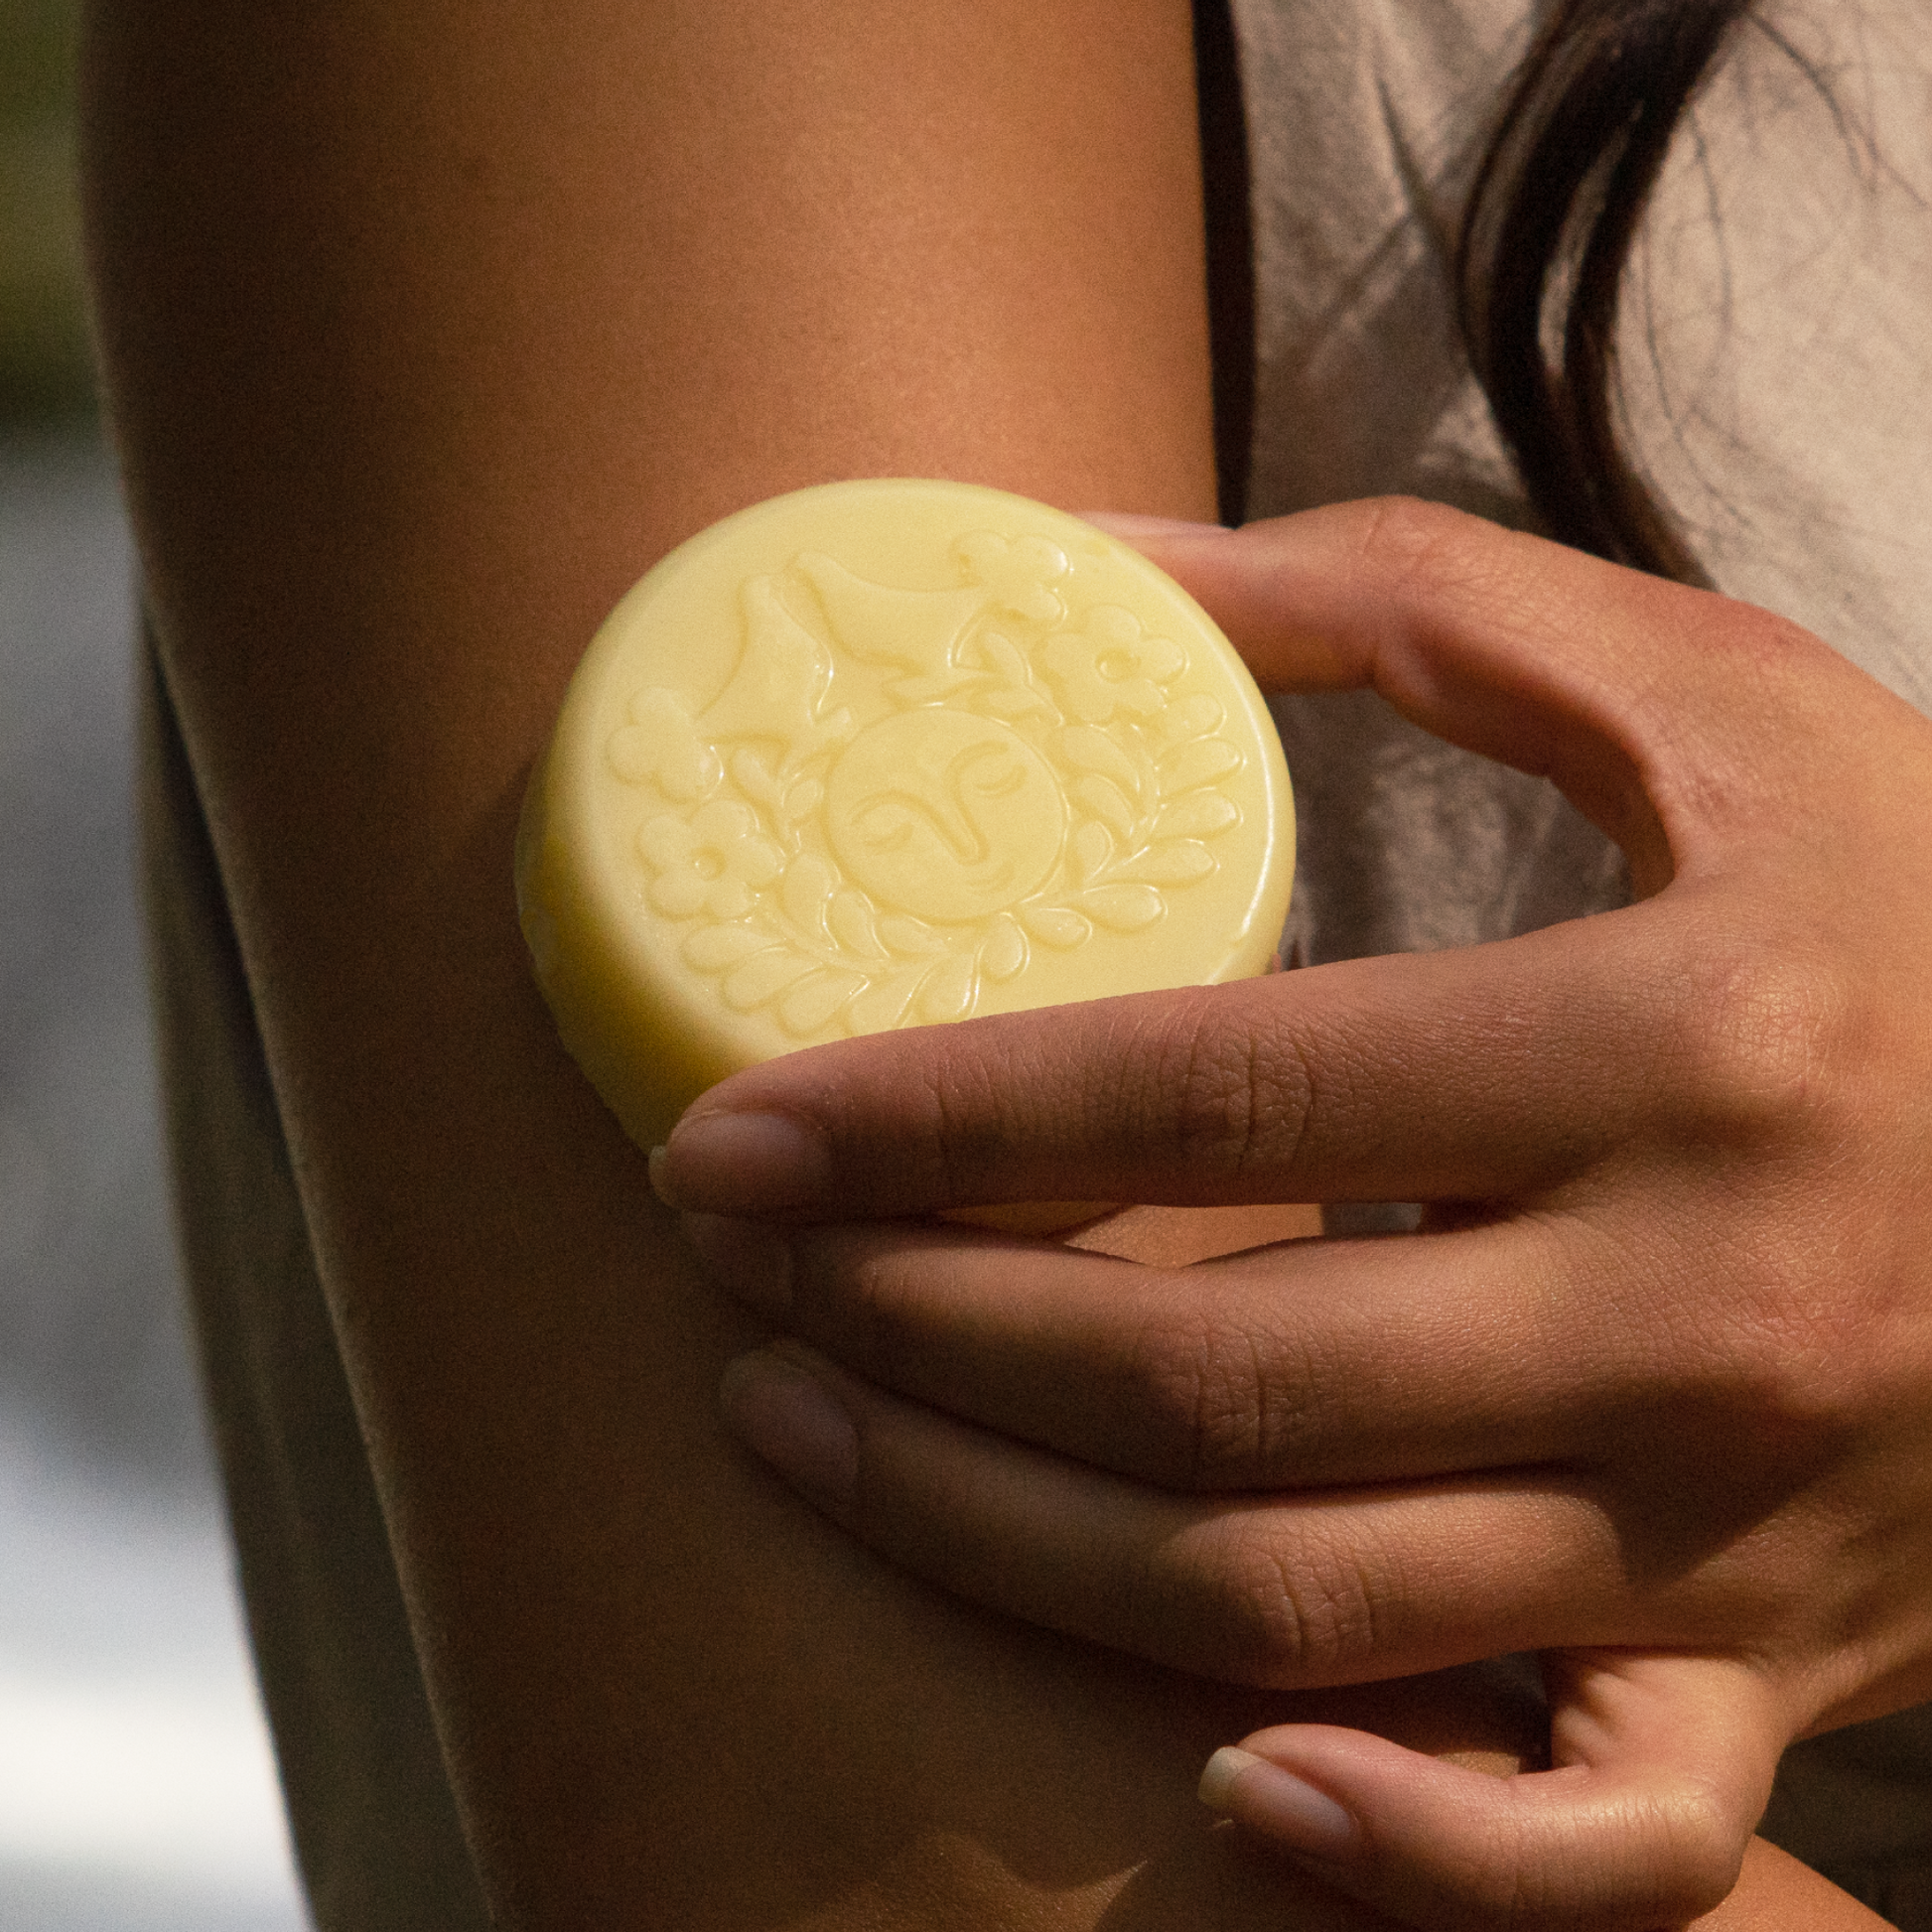 Moon Valley Organics Herbal Lotion Bar Hand rubs lotion bar on arm